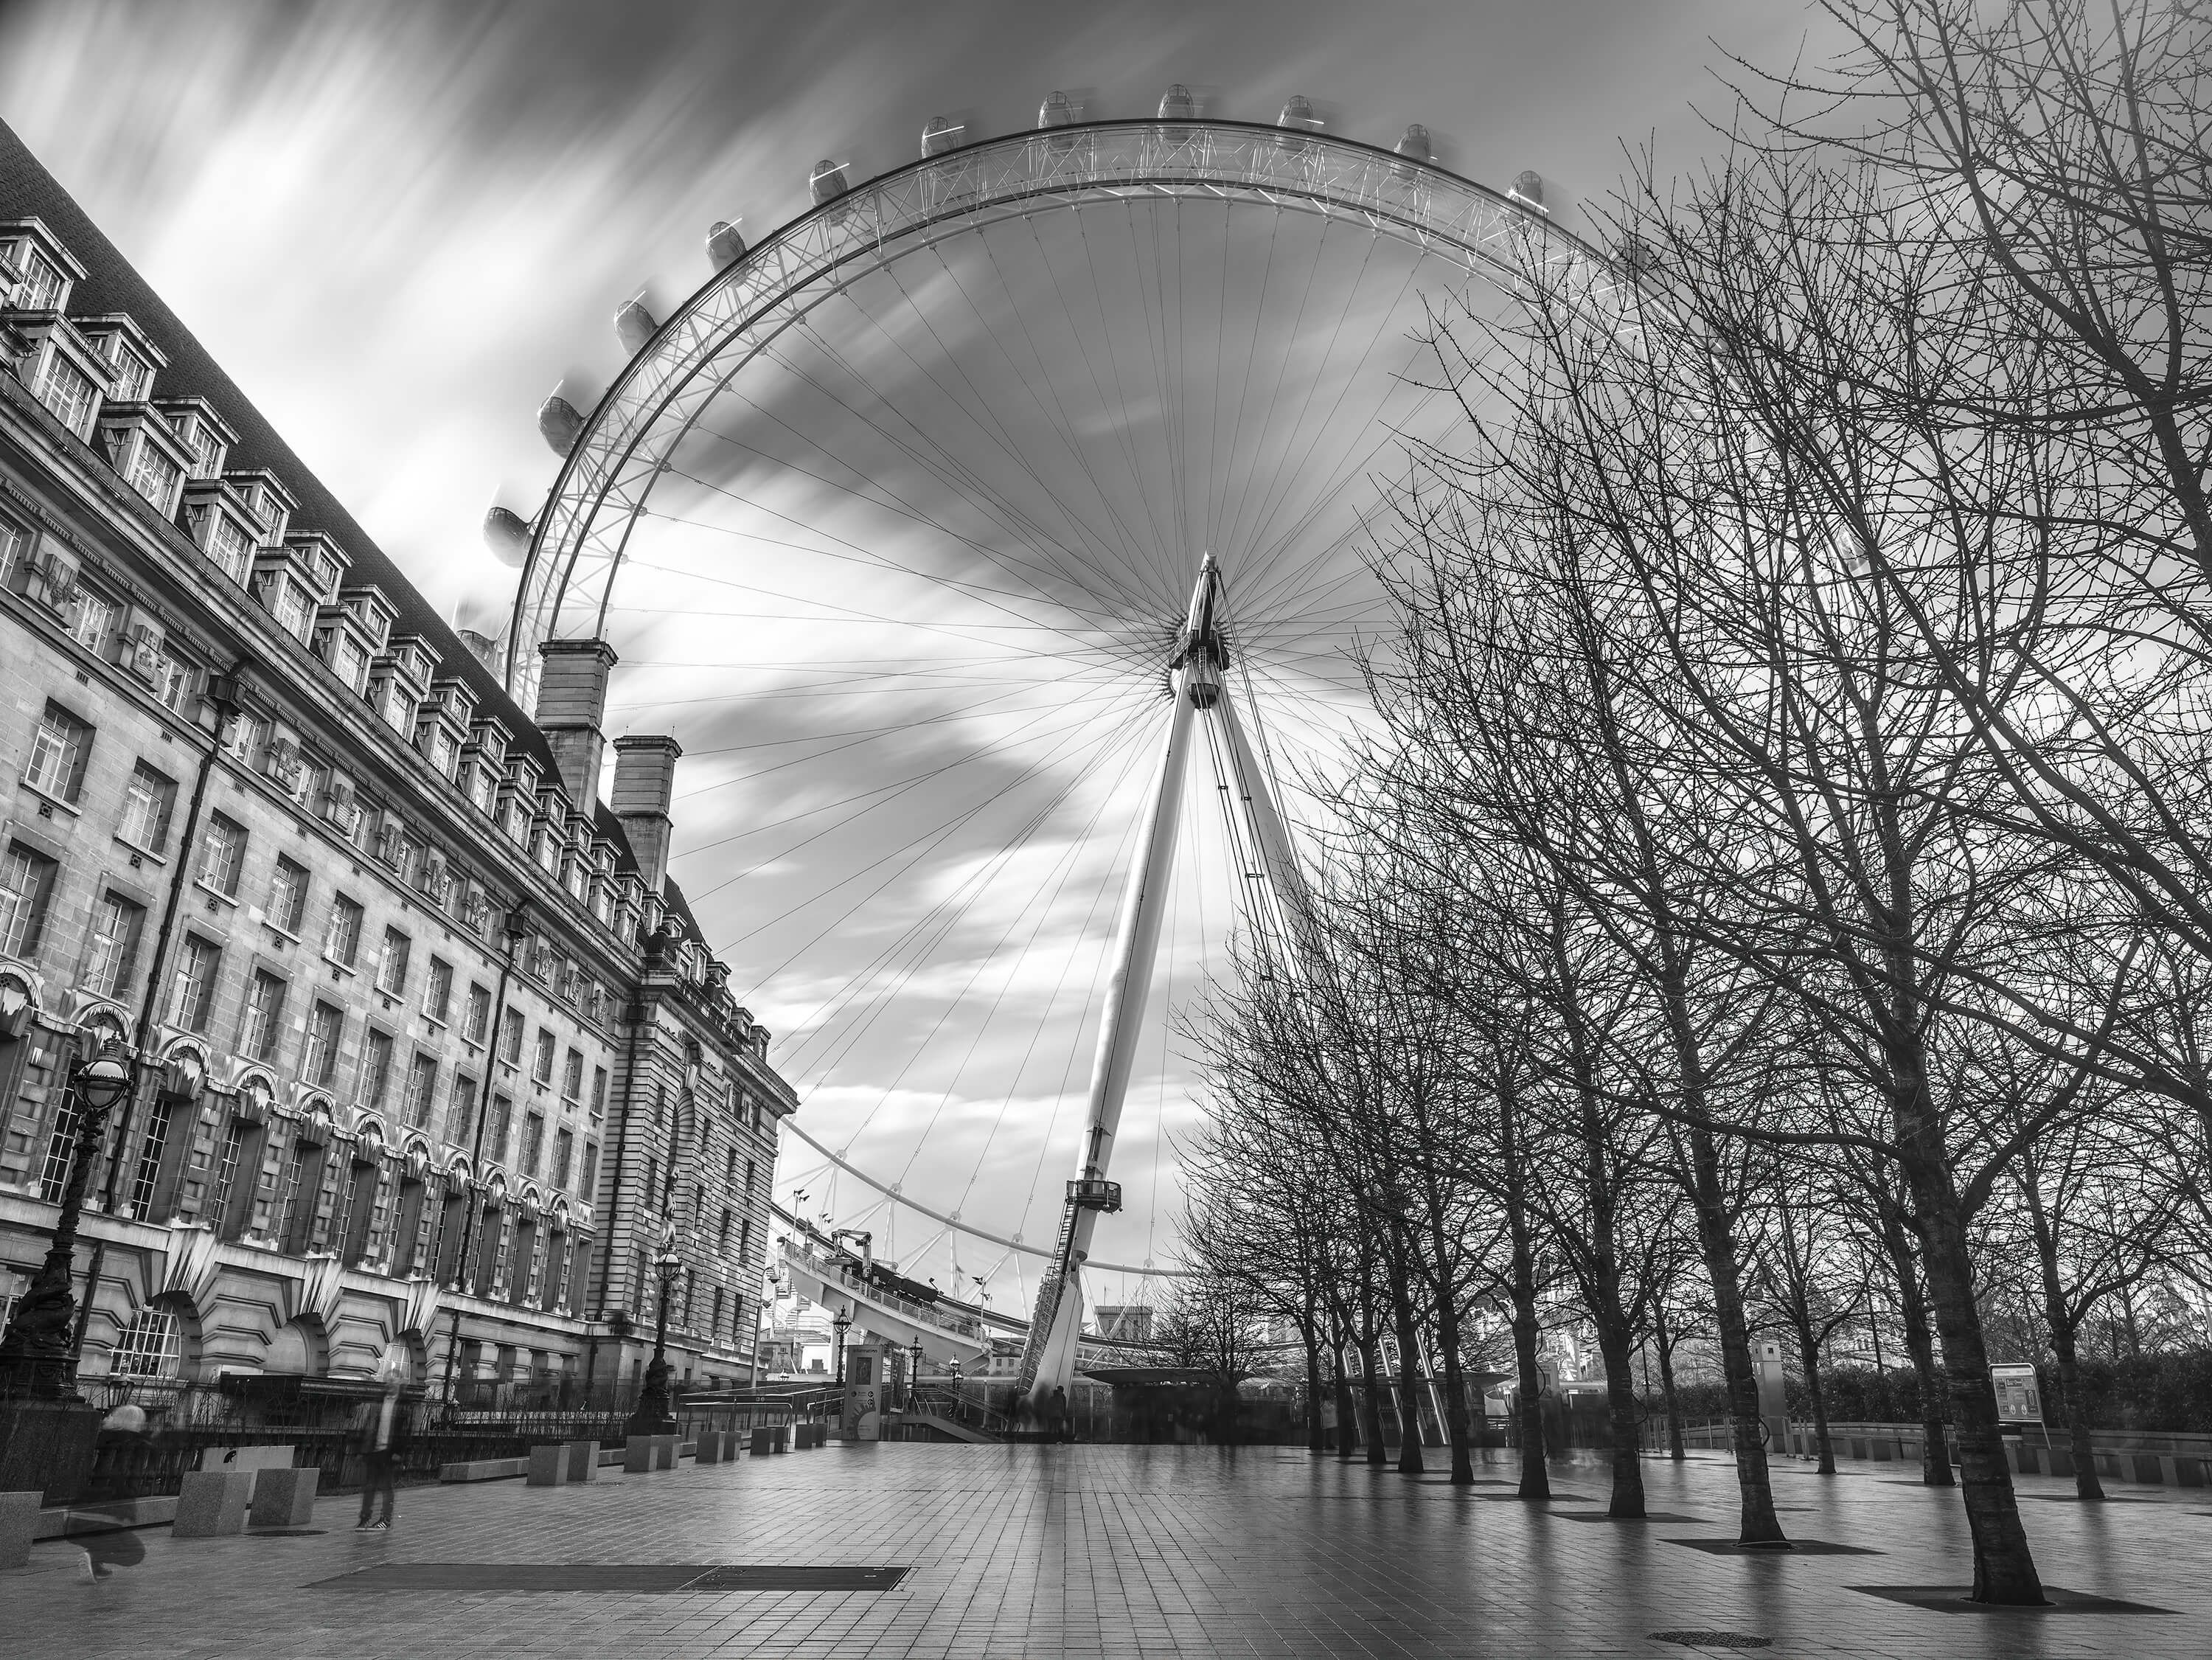  Pariserhjul i London